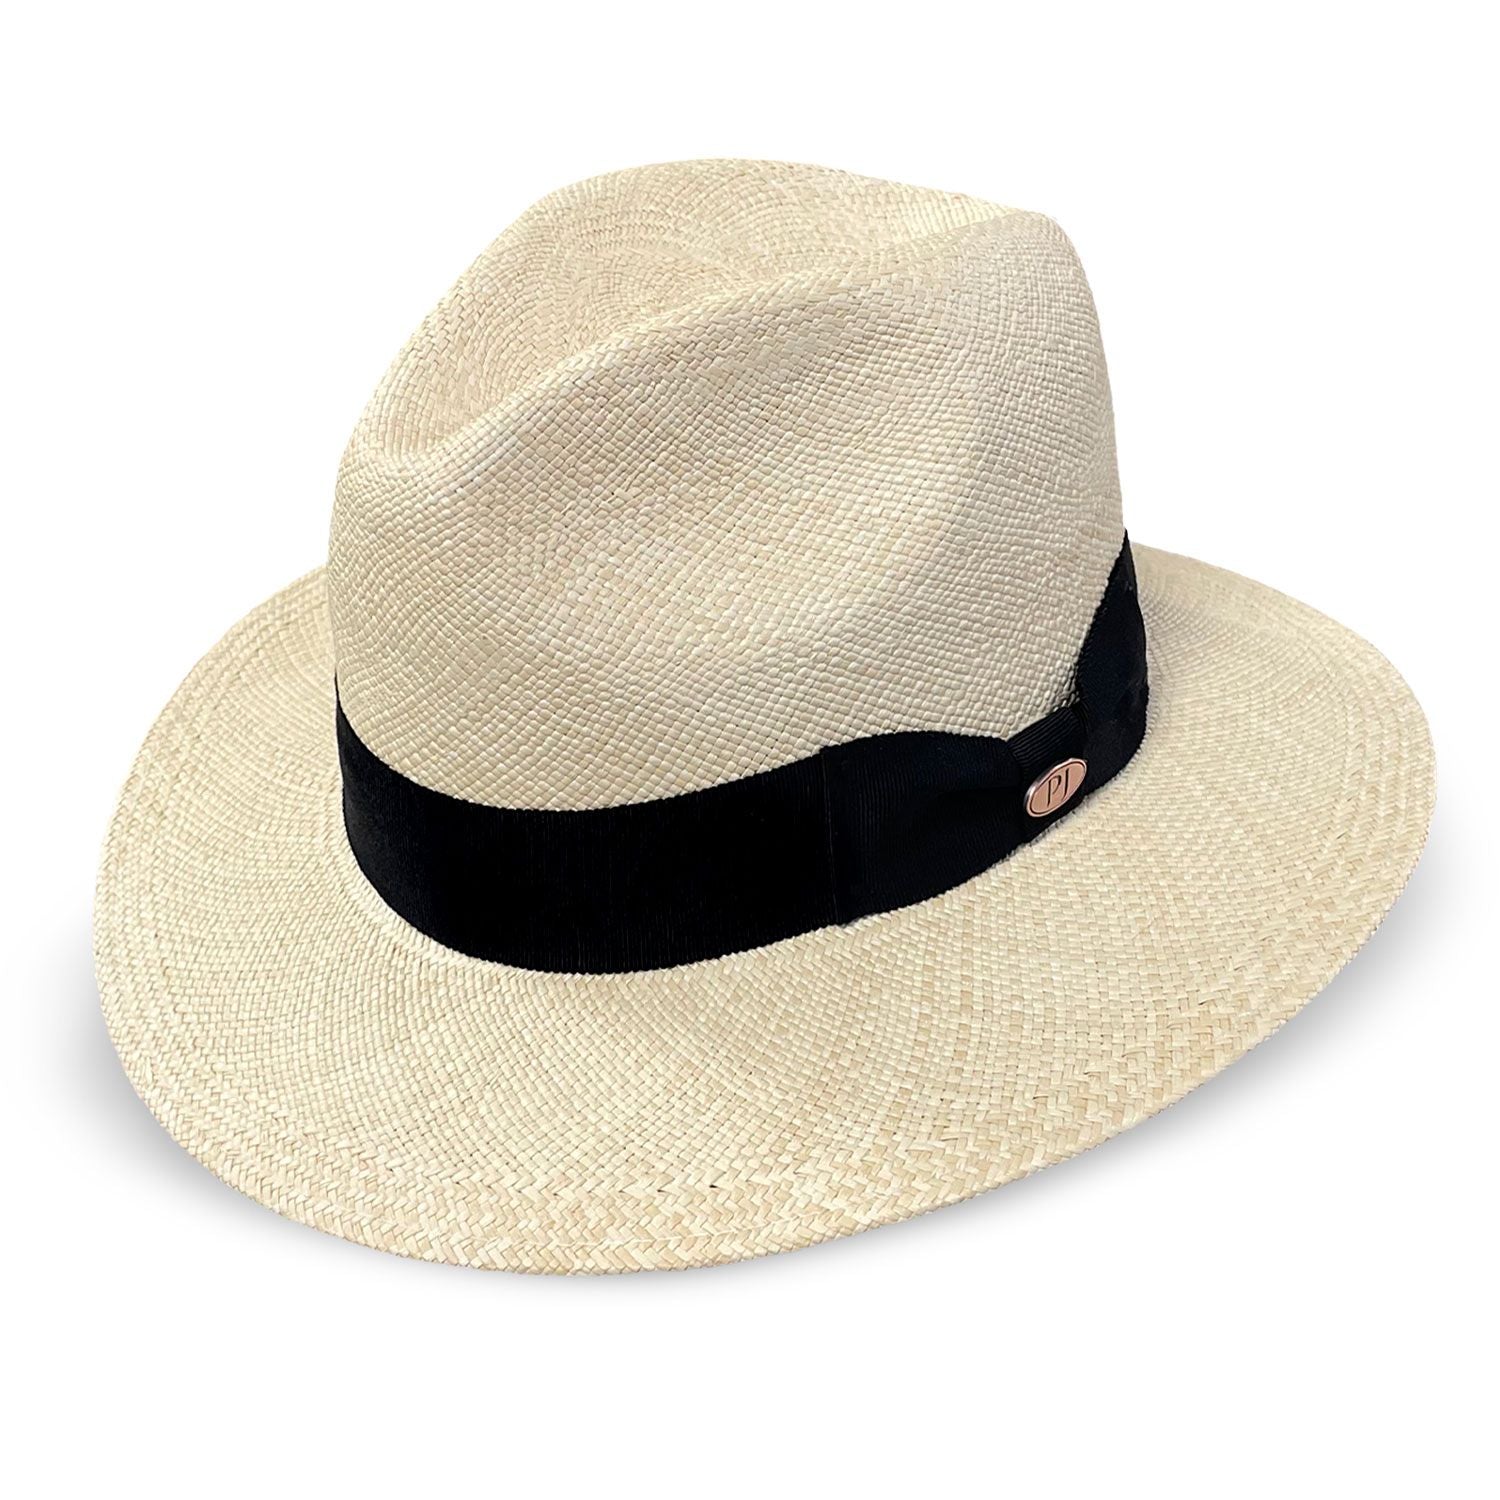 Panama Hats – Panama Jack®